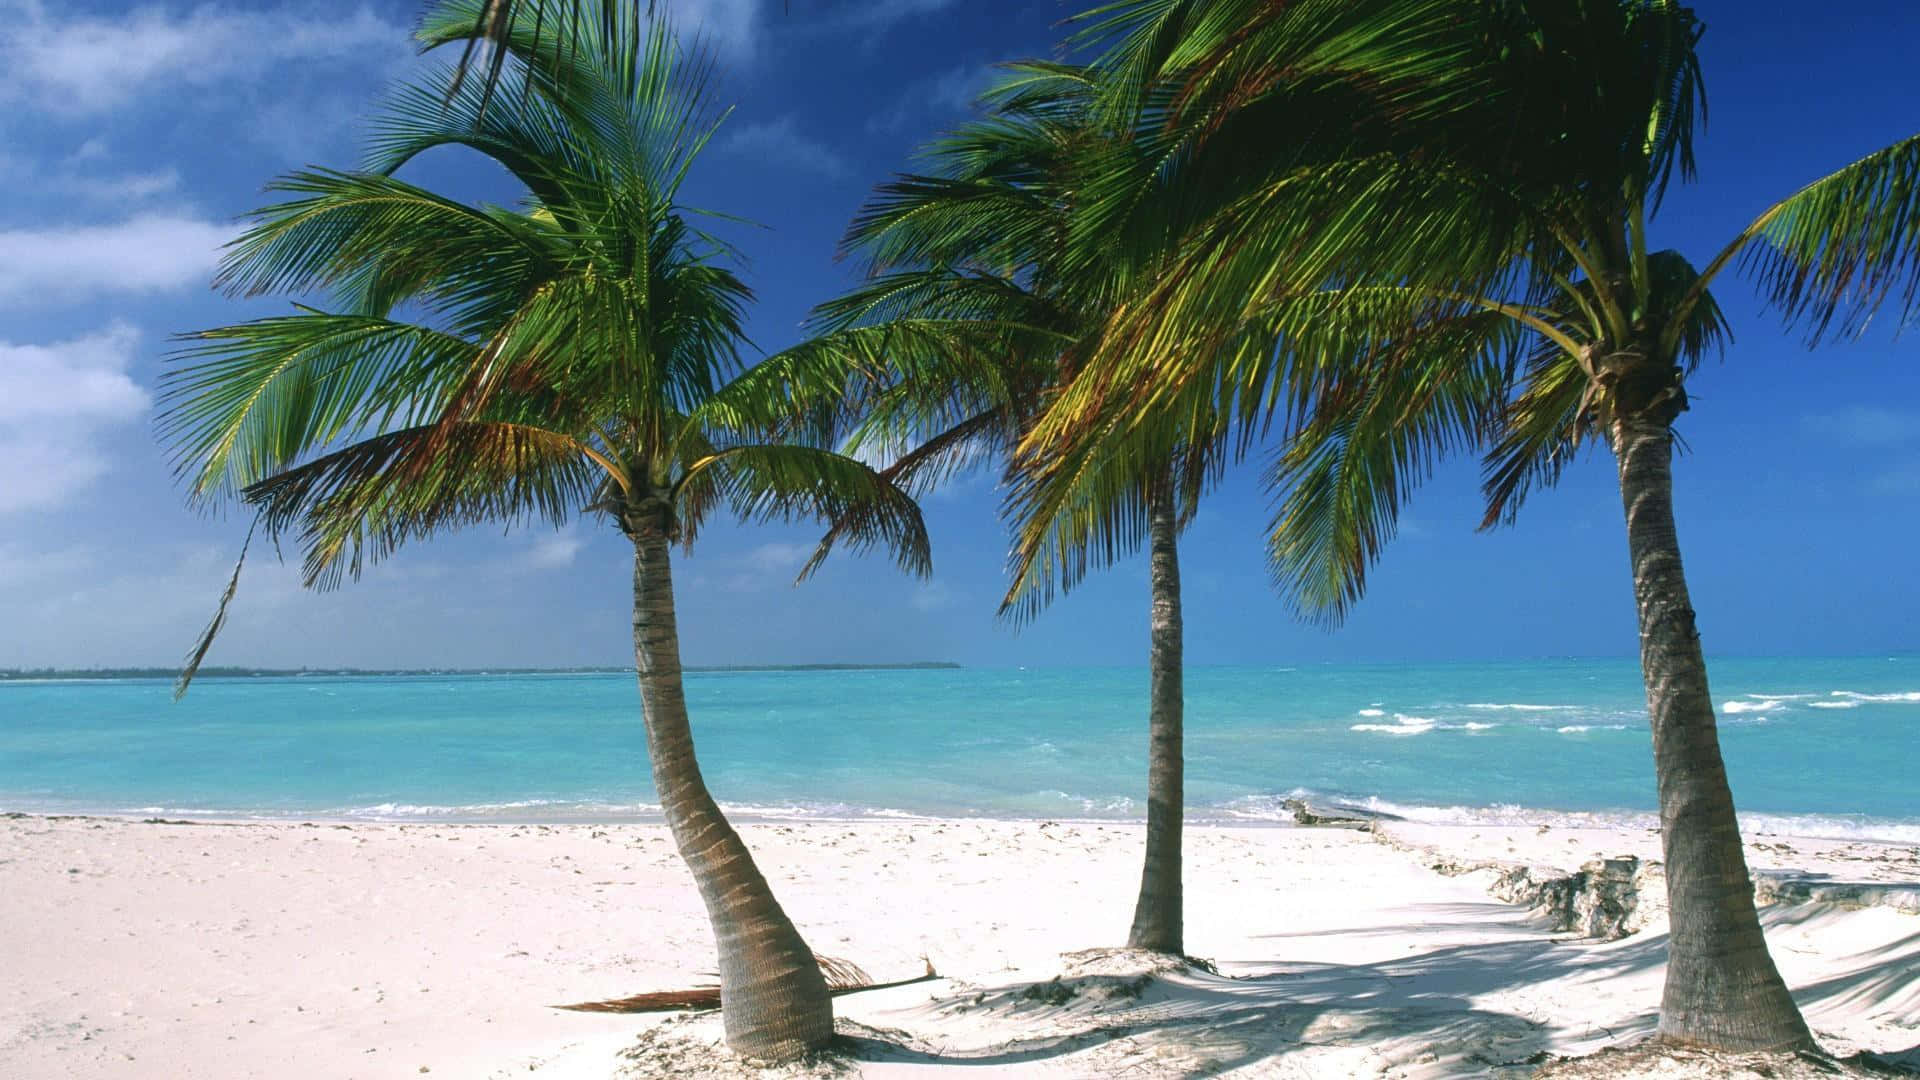 "A beach in the Caribbean, a paradise on earth." Wallpaper